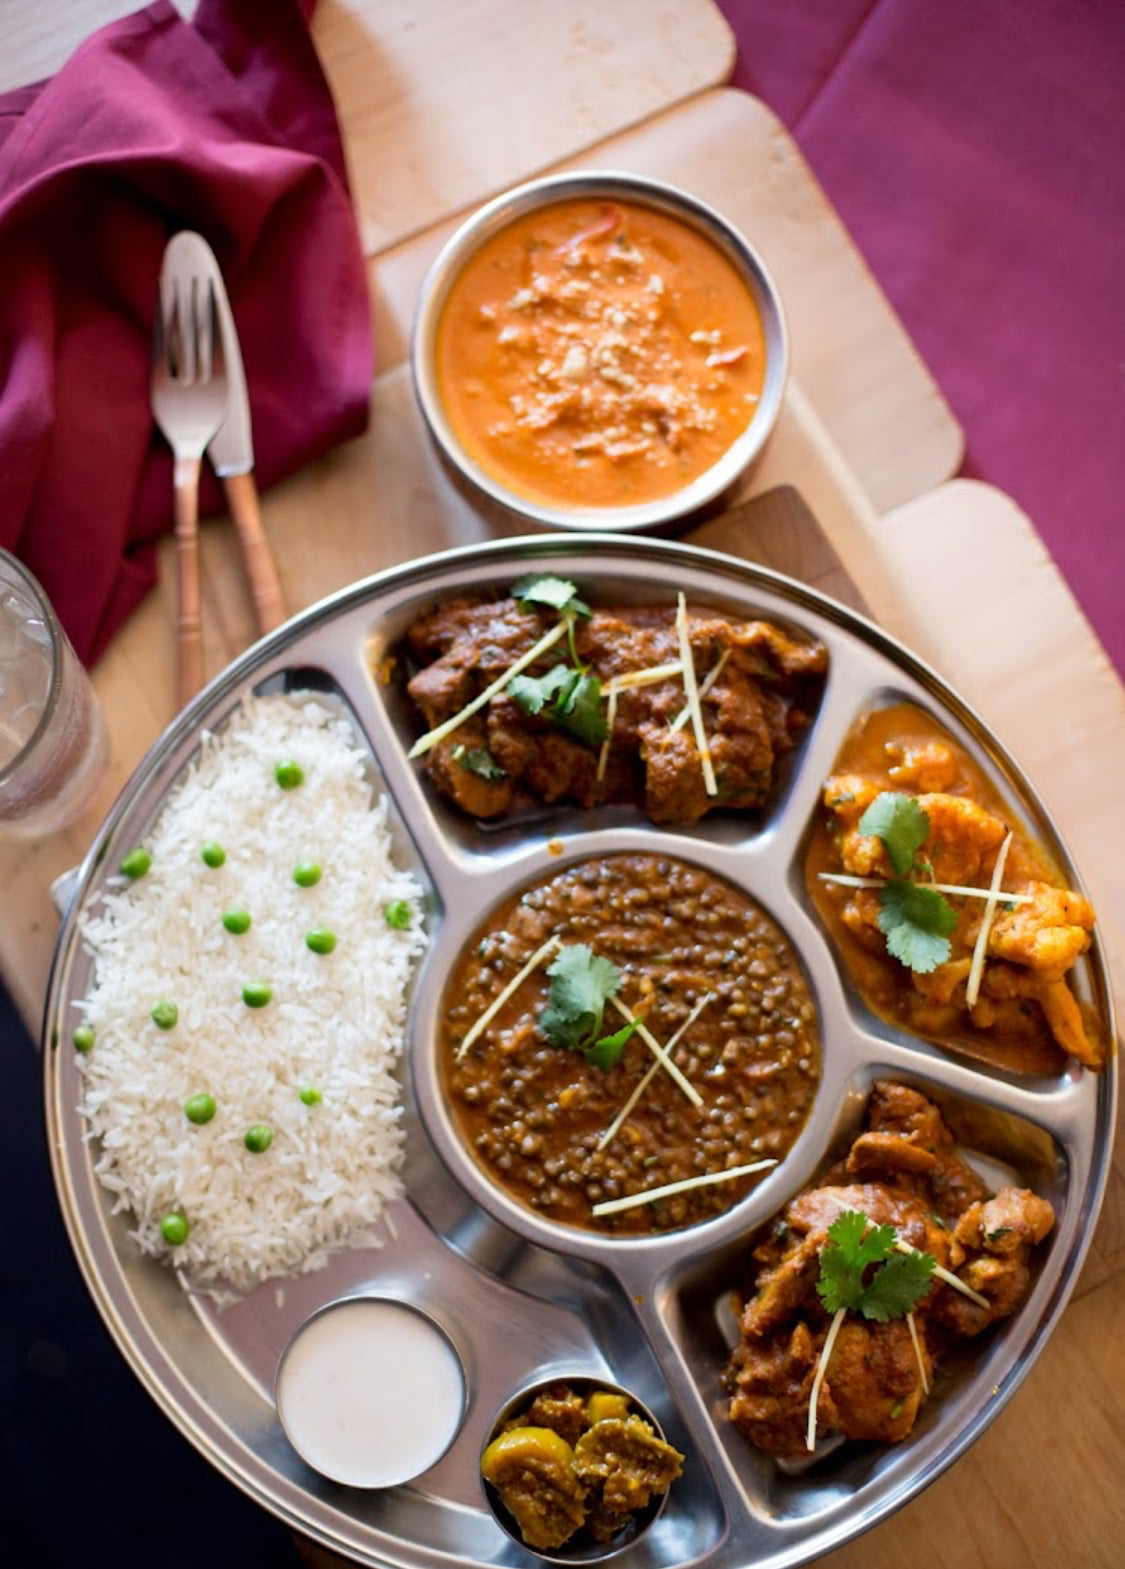 Himalayan Kitchen: A Culinary Jewel in Downtown Salt Lake City